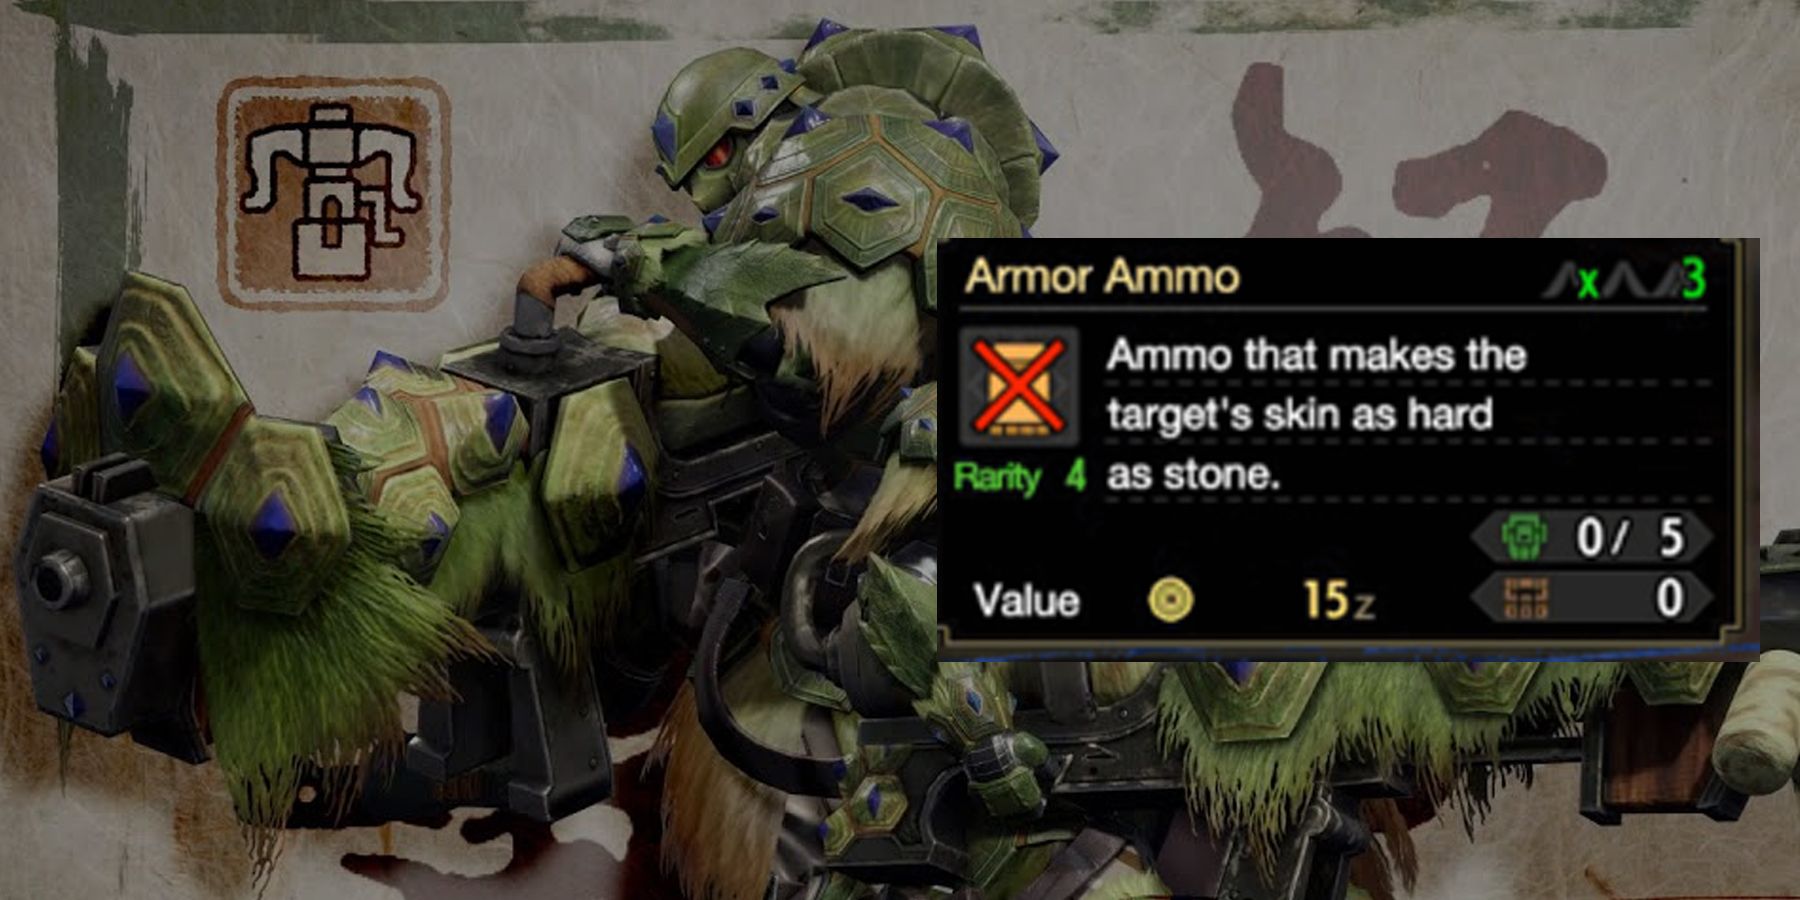 Armor Ammo